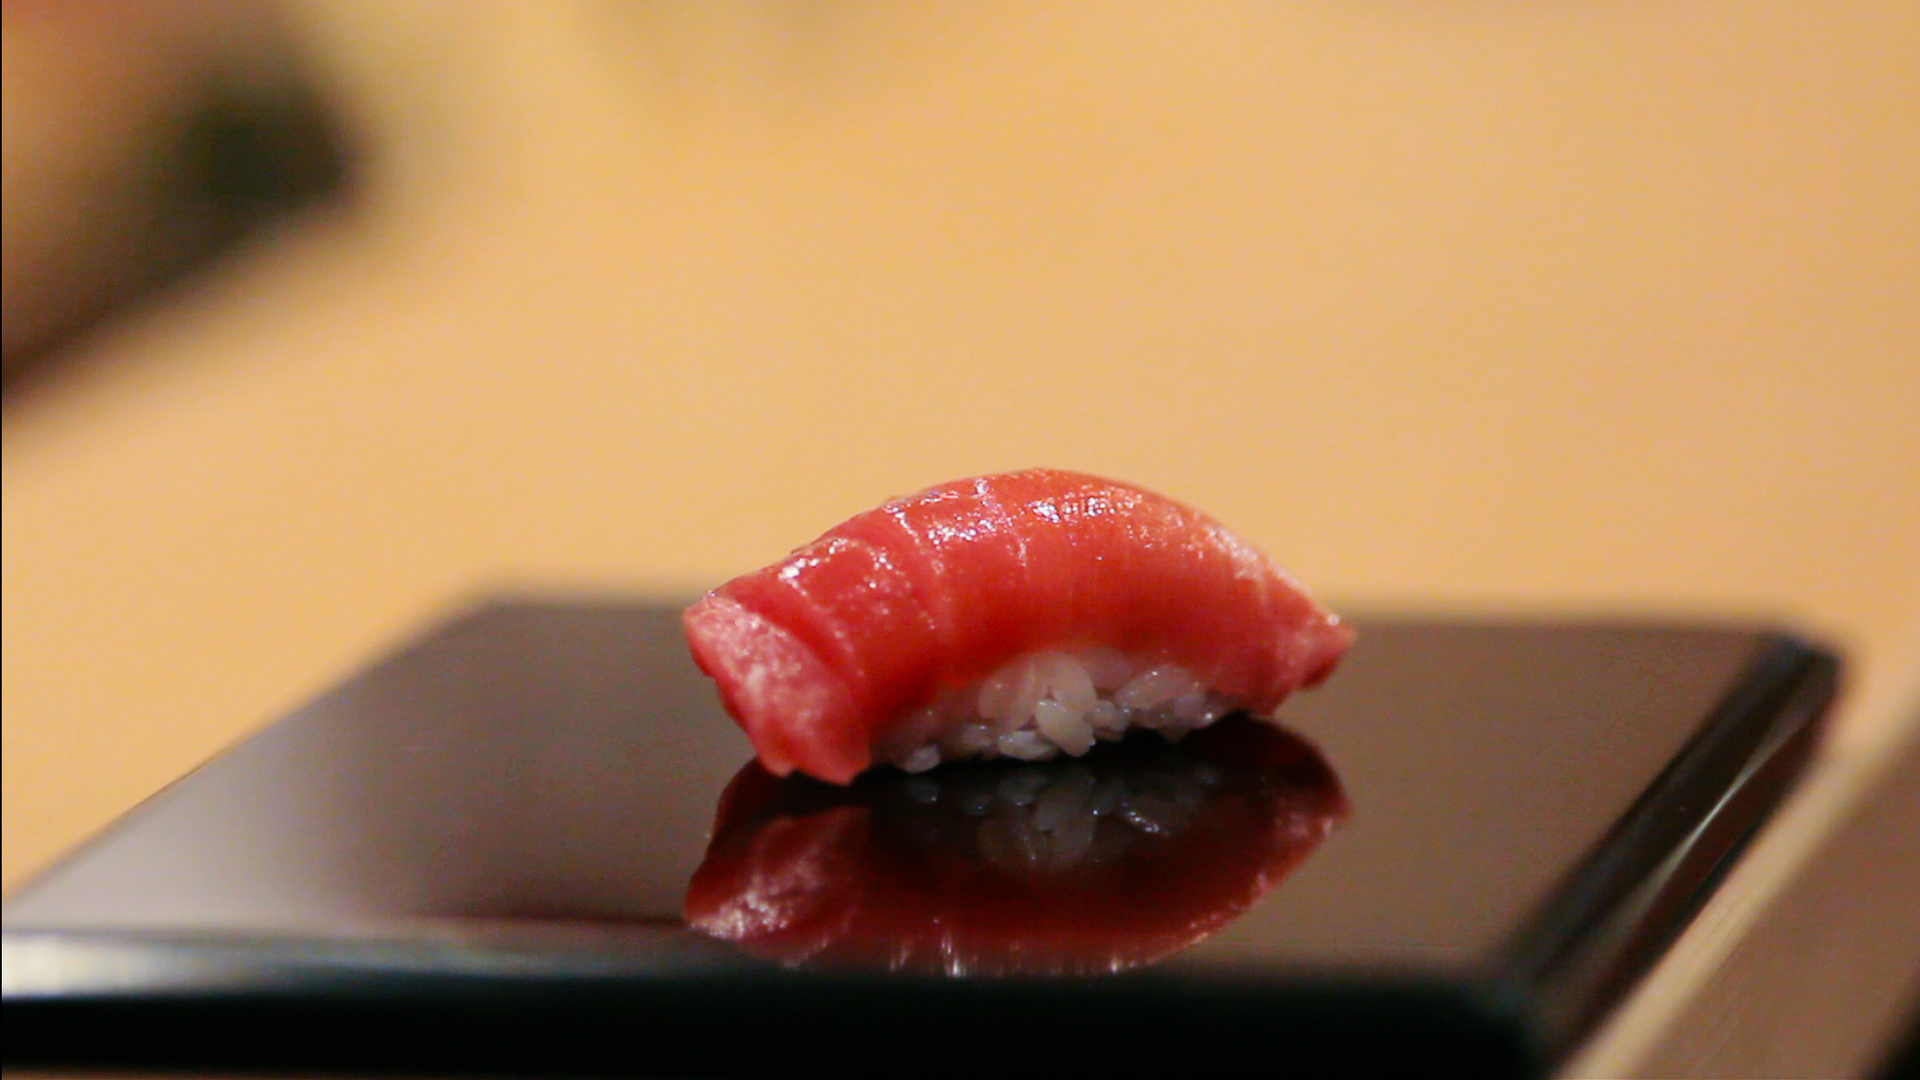 FFF2012 Interview: David Gelb, Director of Jiro Dreams of Sushi